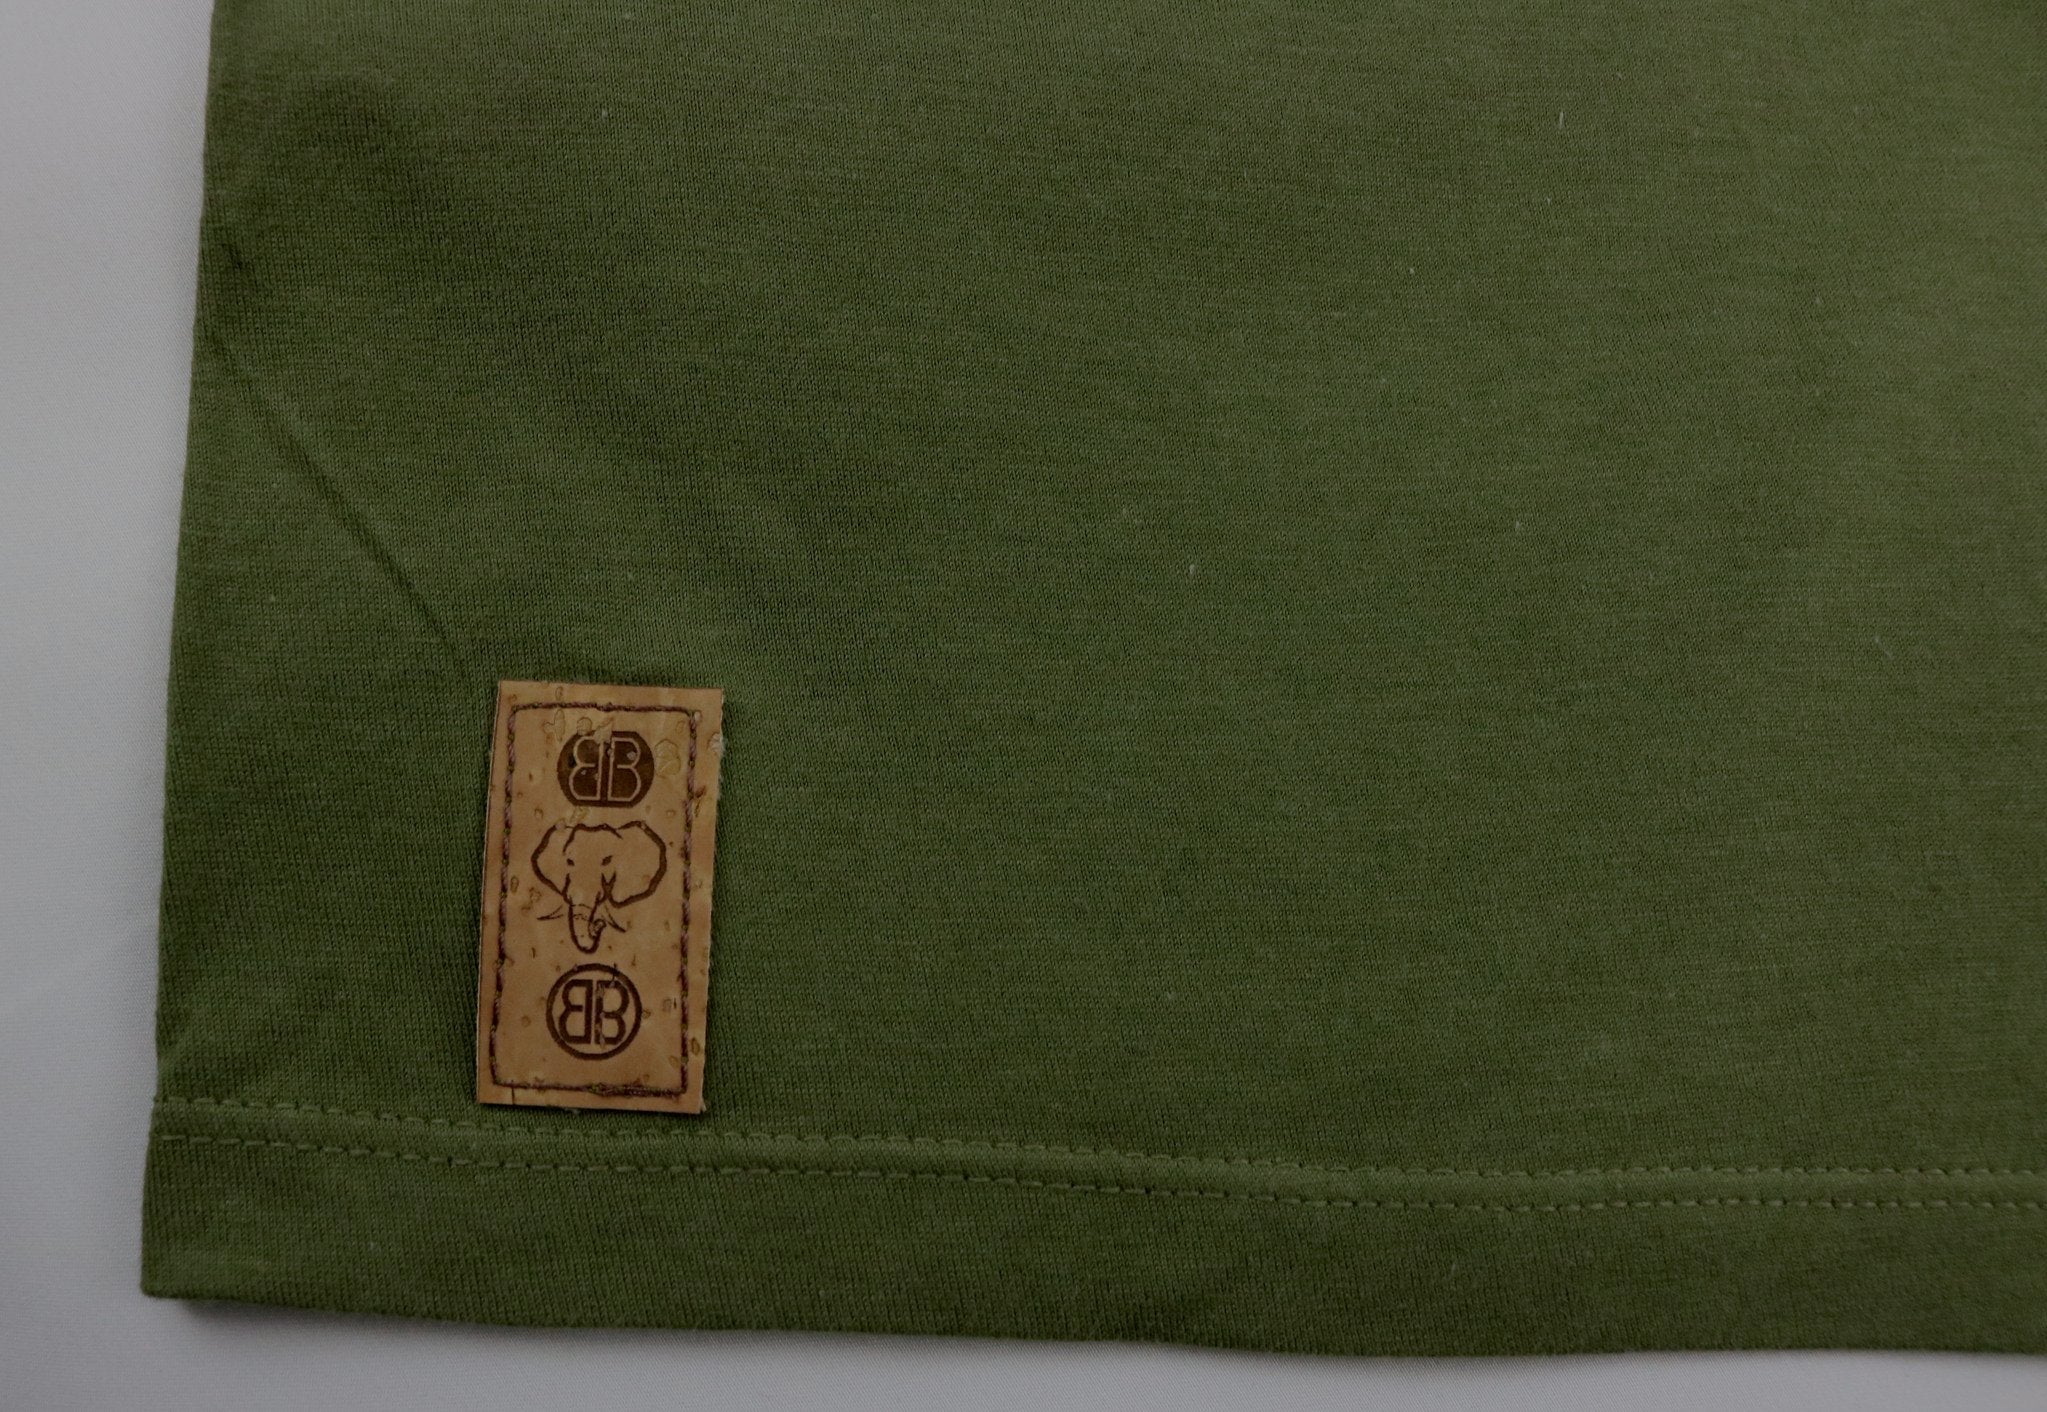 Elephant Head Military Tee/Orange Embroidery